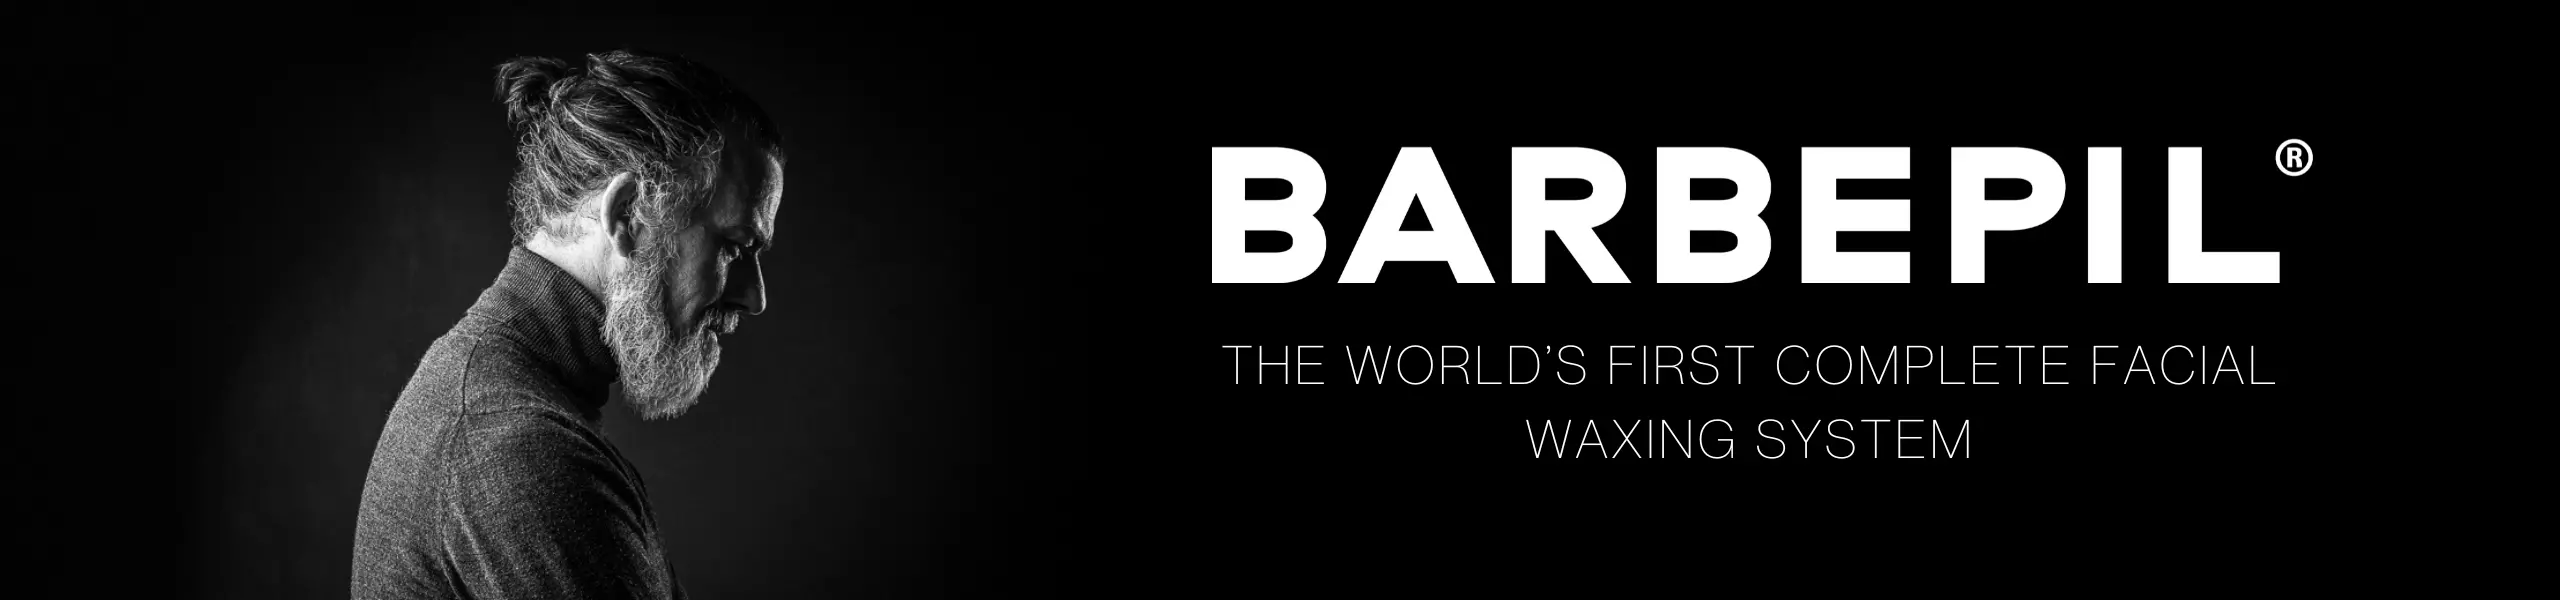 Barbepil Brands Page Banner.png